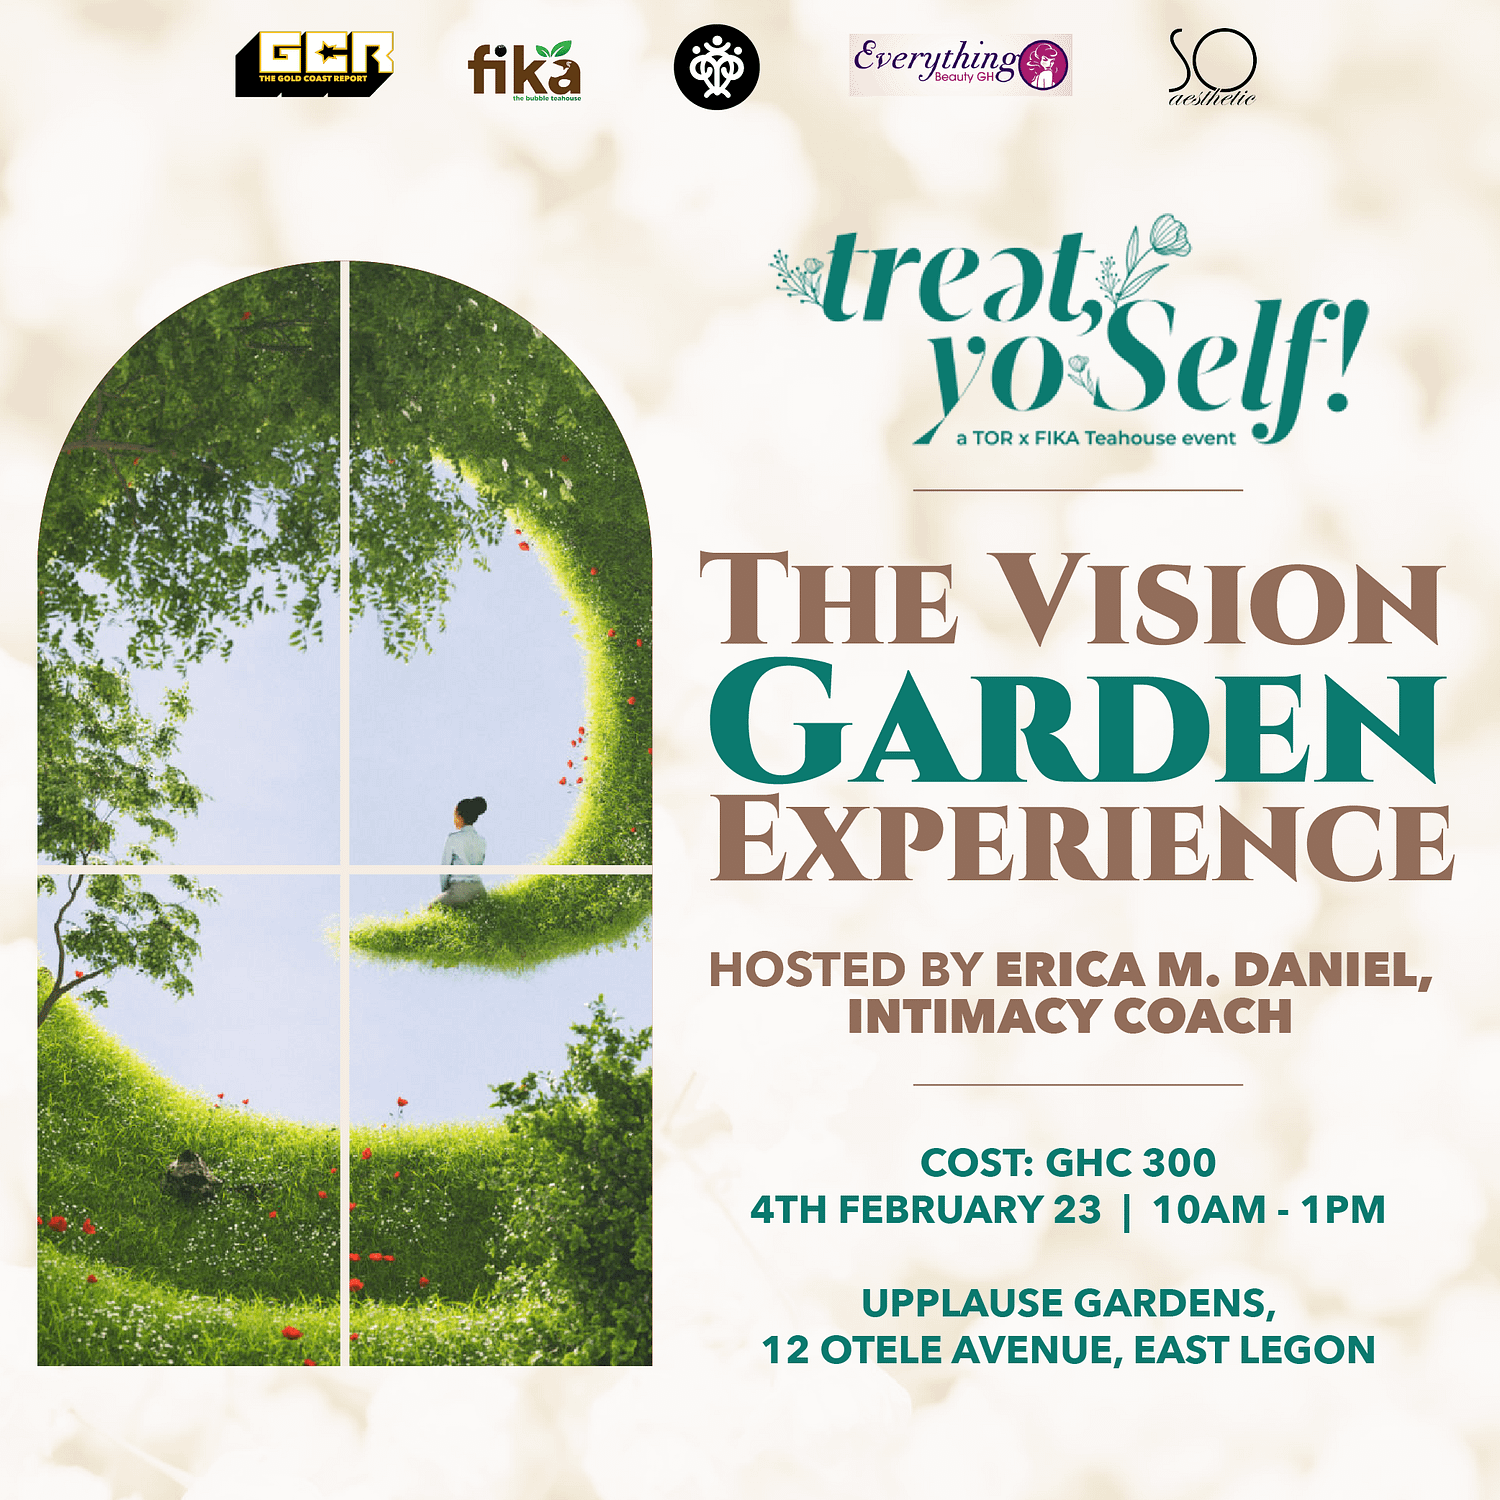 The vision garden experience